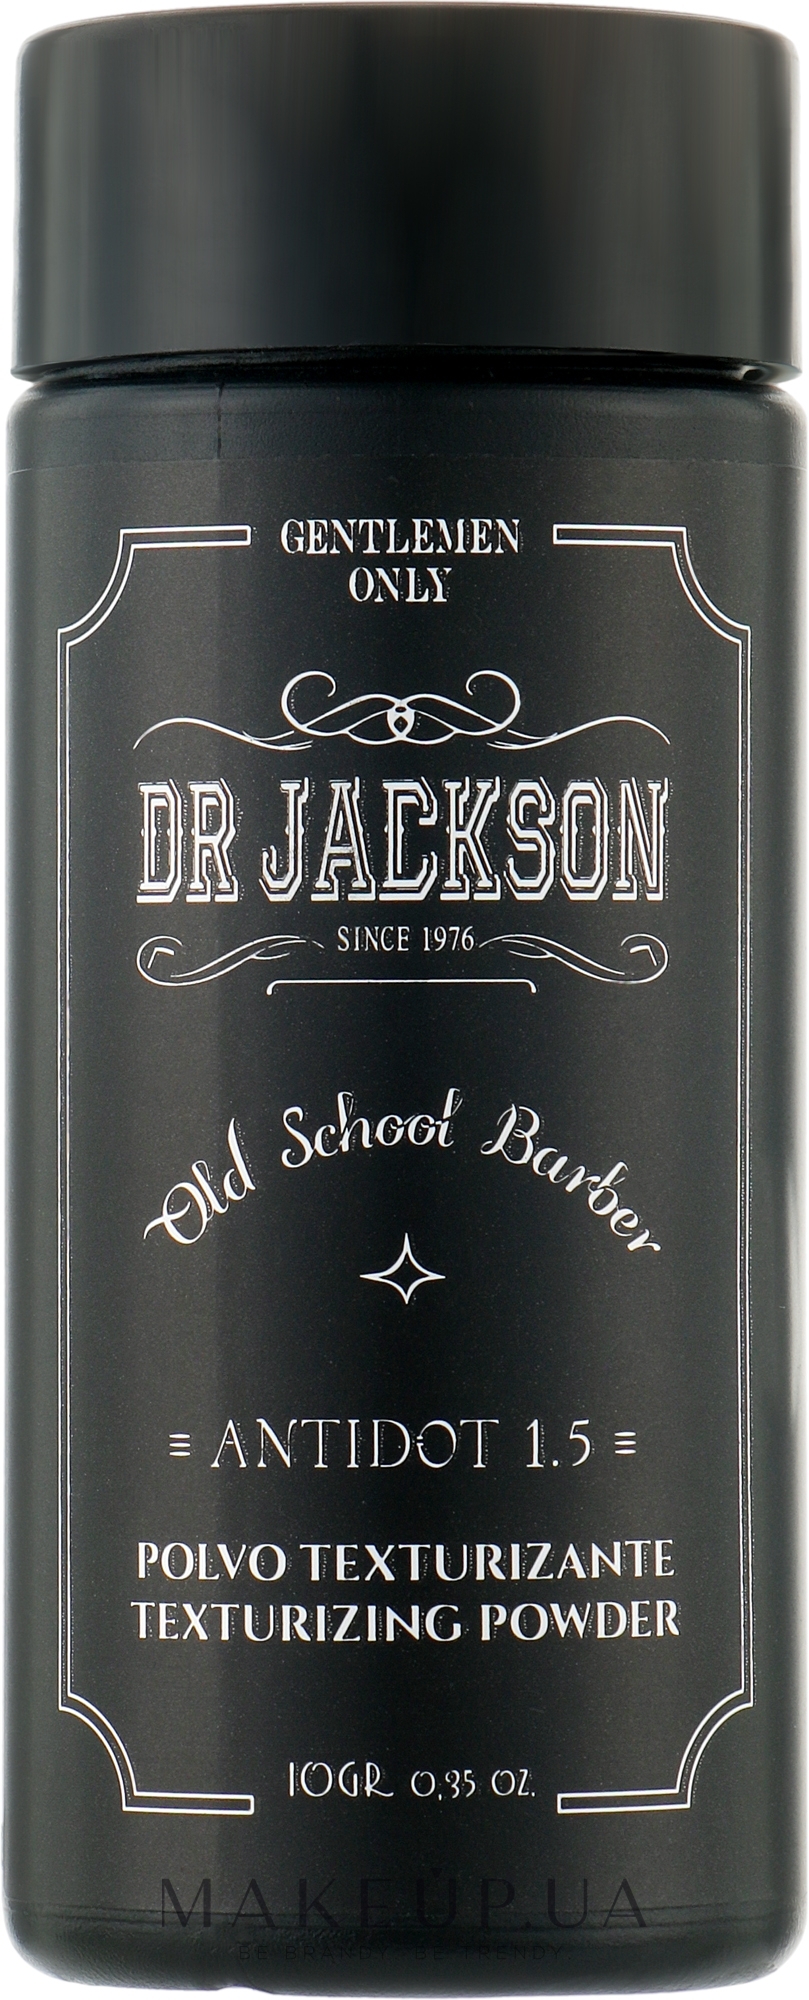 Текстурувальна пудра-антидод - Dr Jackson Gentlemen Only Antidod 1.5 Texturizing Powder — фото 10g